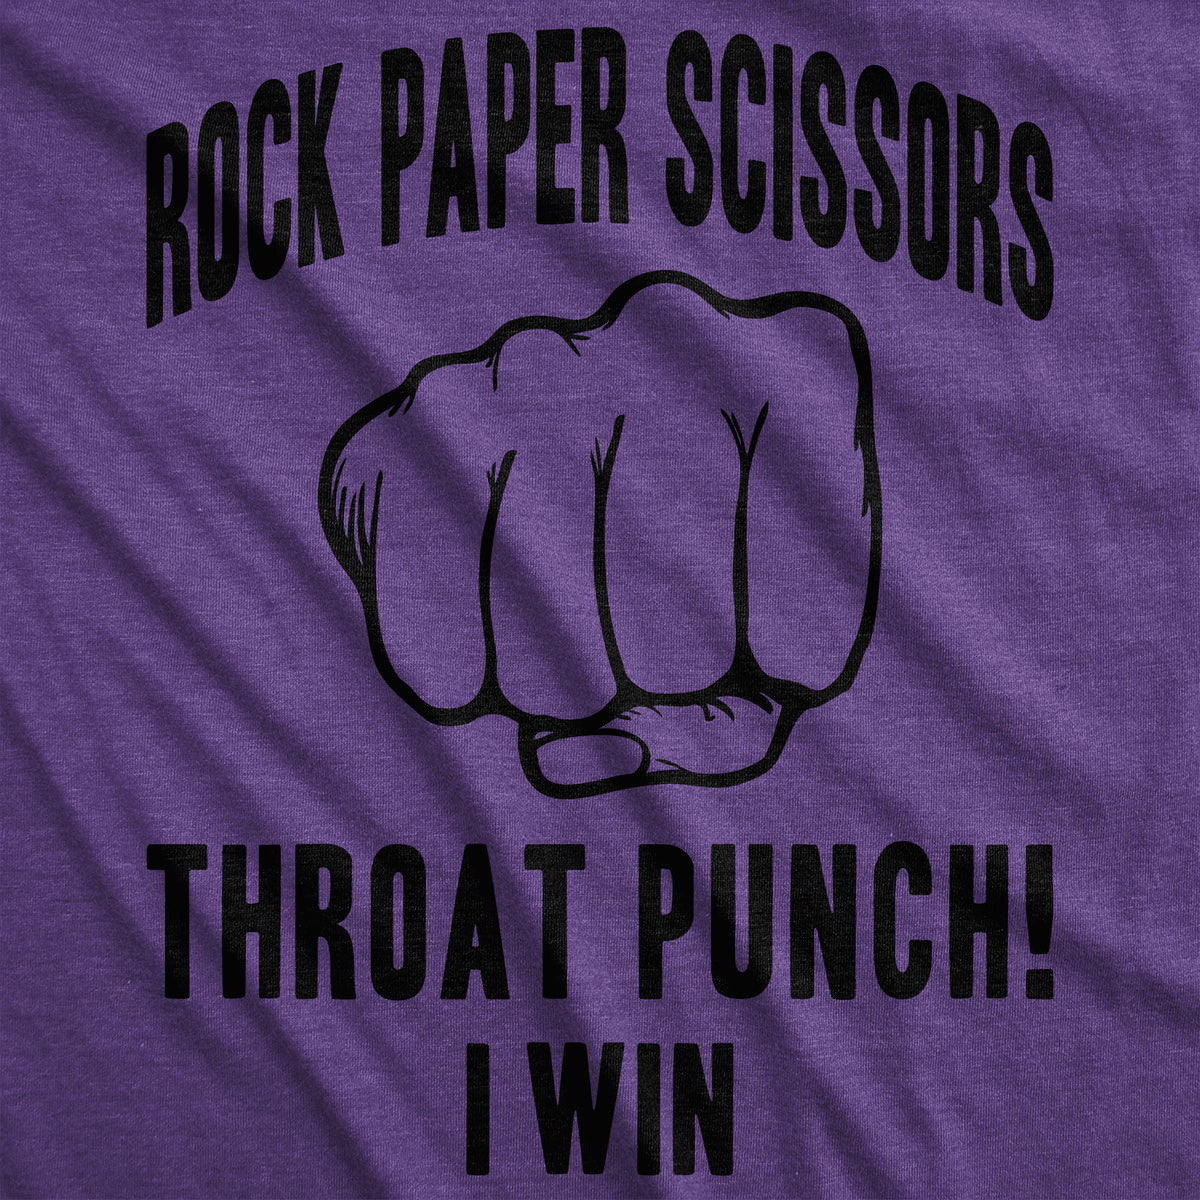 Rock Paper Scissors Throat Punch Women&#39;s T Shirt